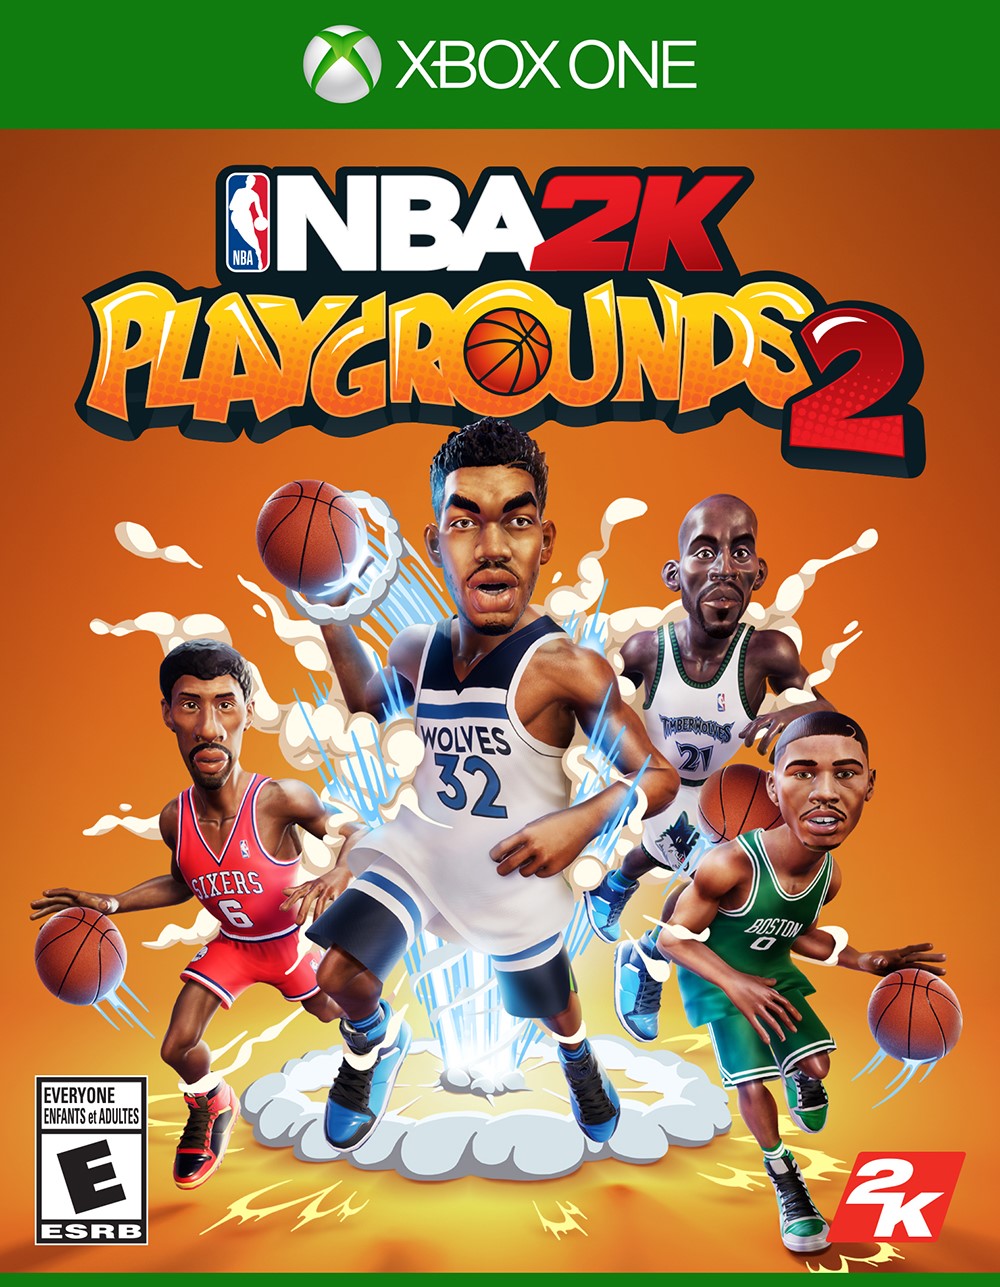 FIFA 18+NBA 2K Playgrounds 2 XBOX ONE